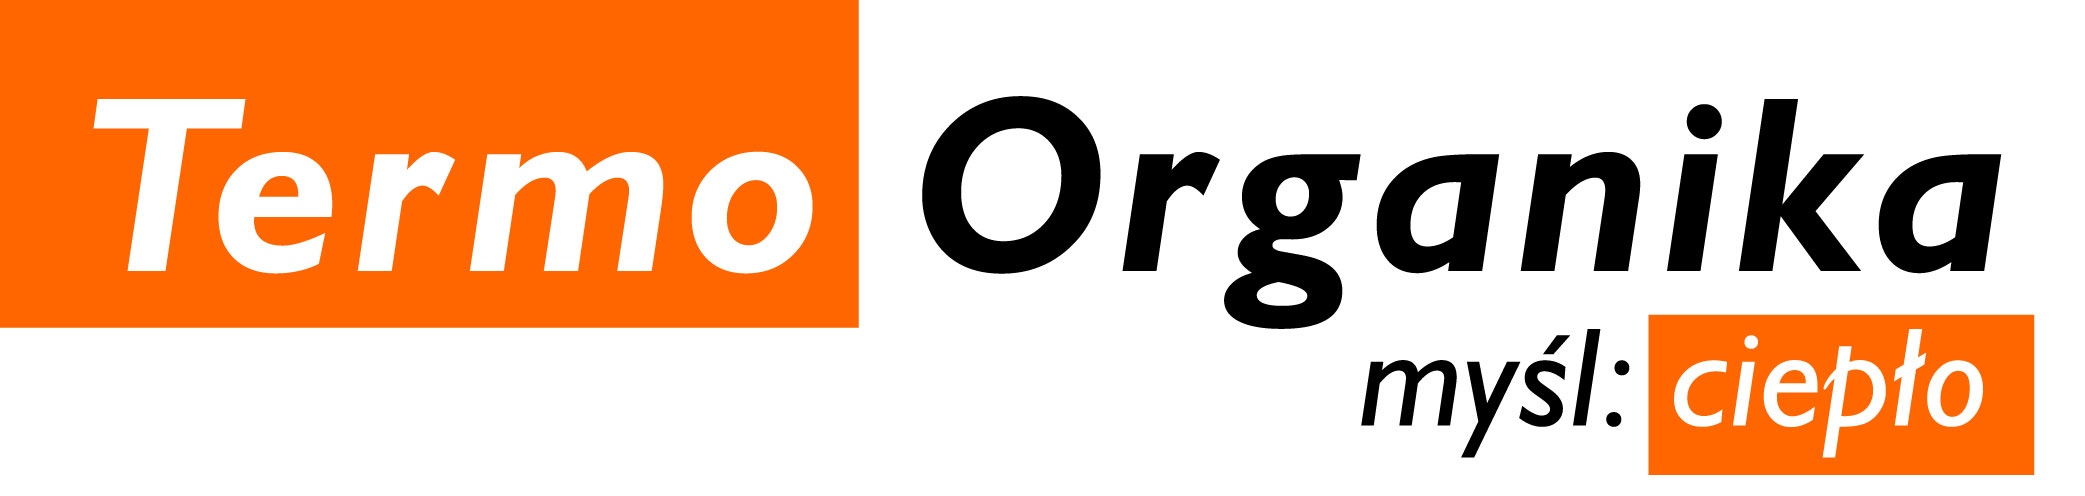 logo_TERMO ORGANIKA_mysl cieplo logo.jpg